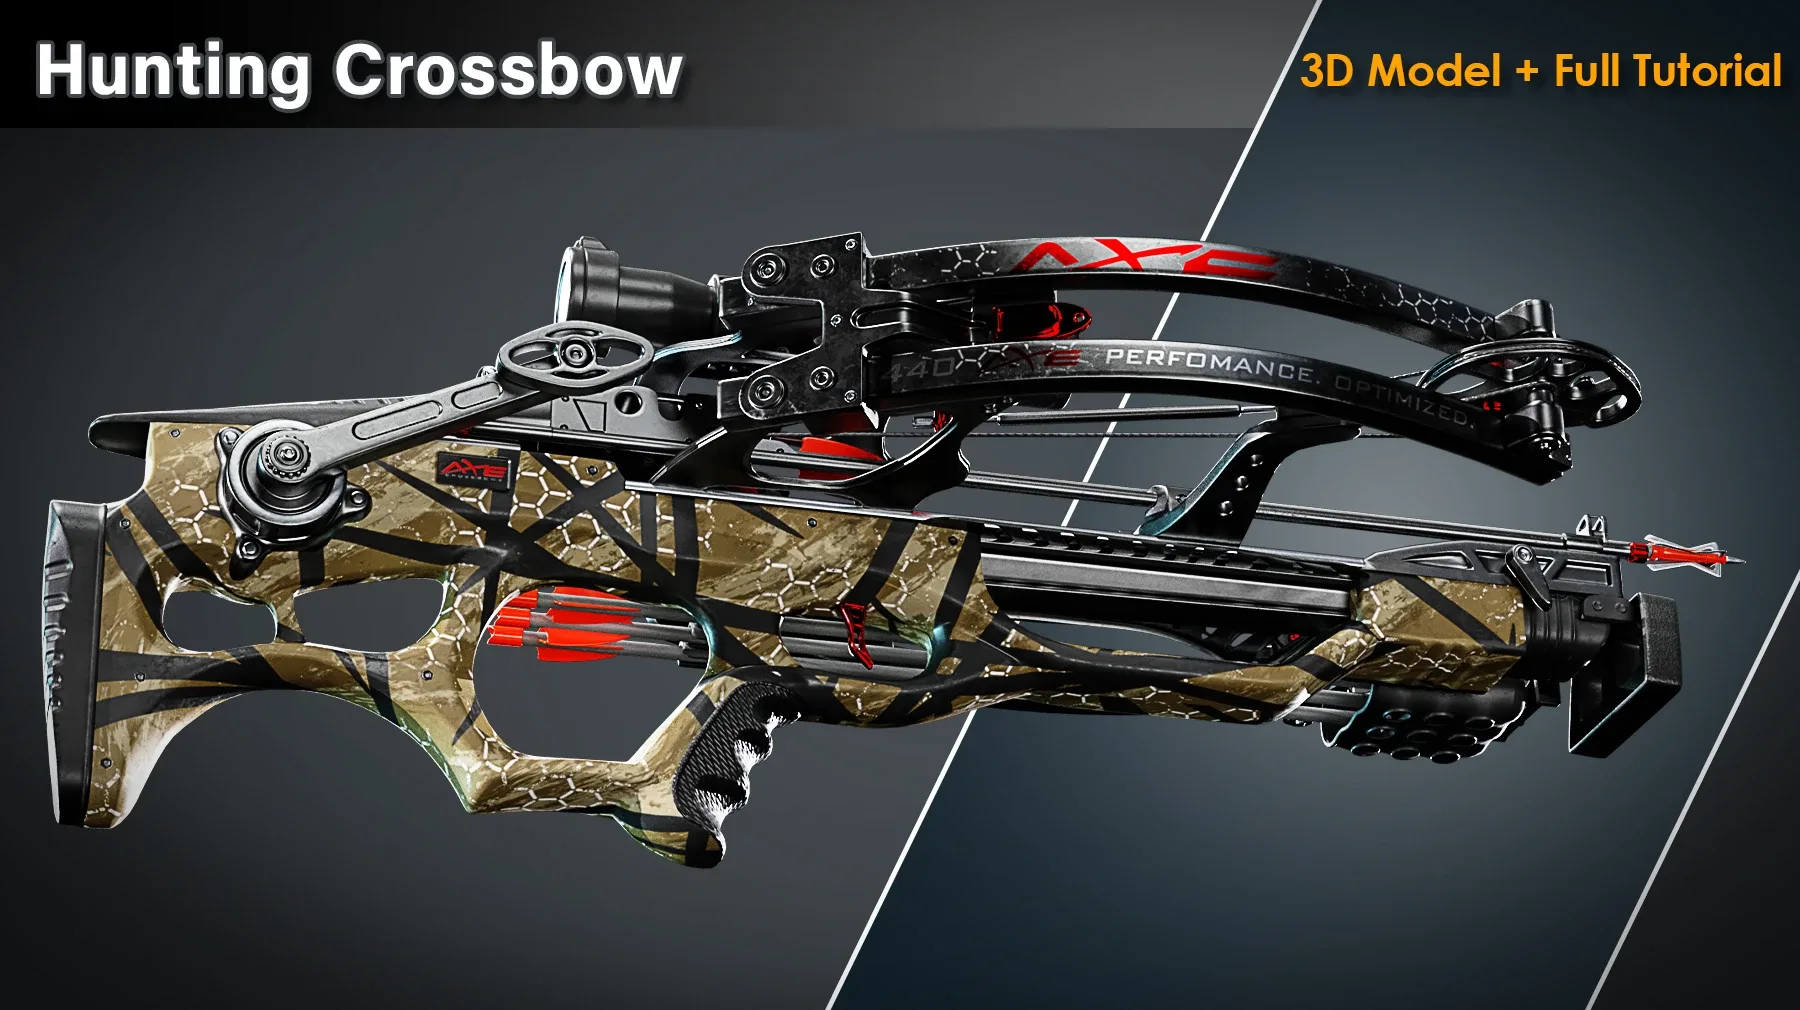 Hunting Crossbow / 3D Model + Full Tutorial